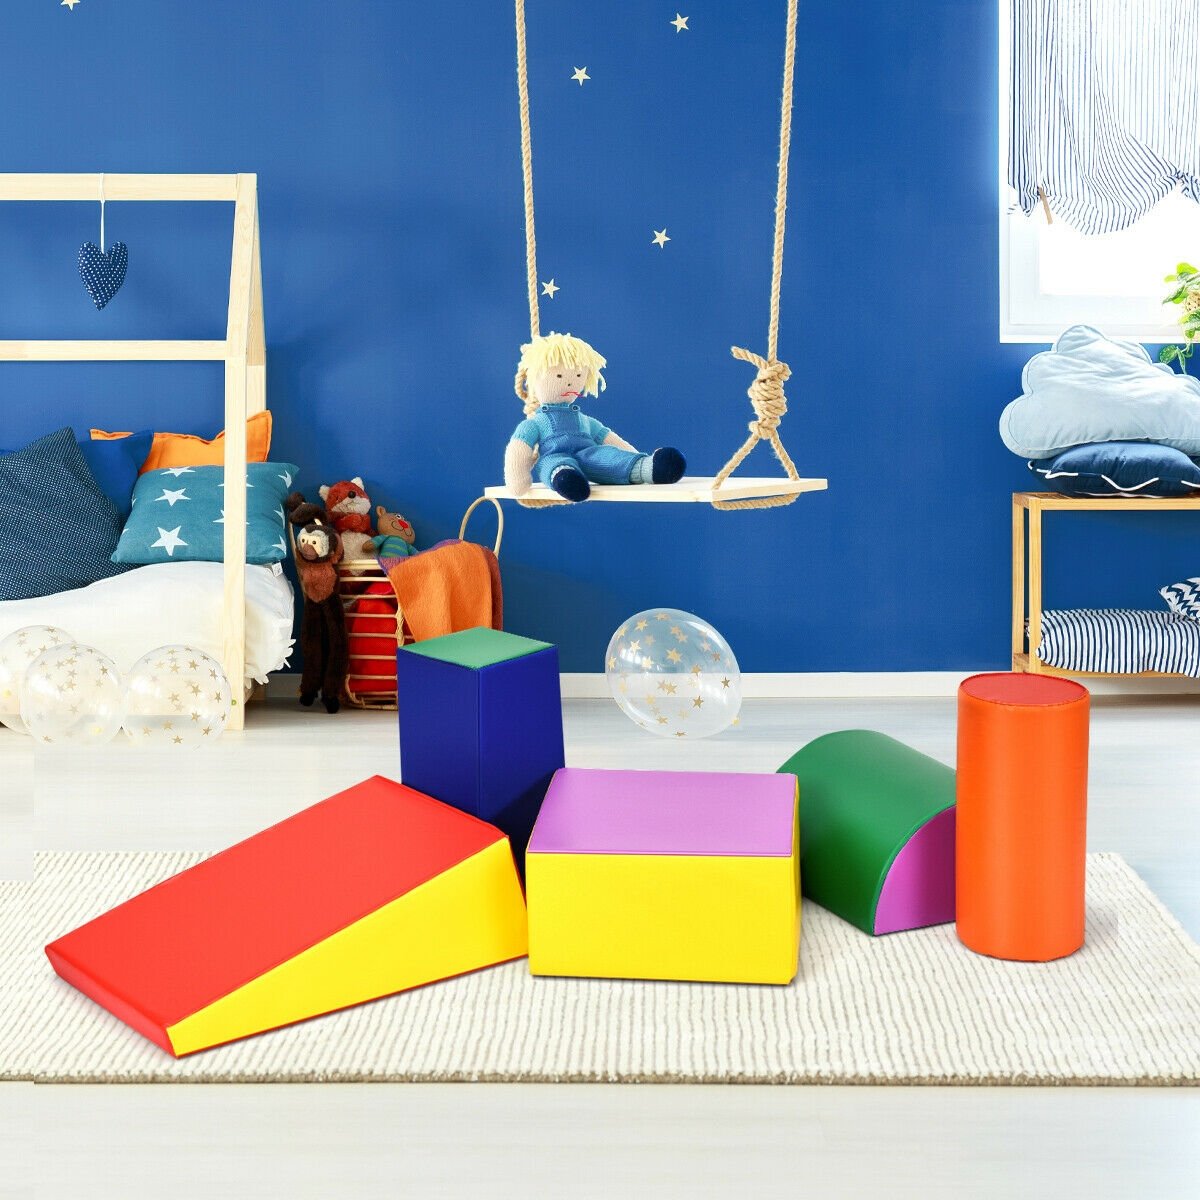 Crawl Climb Foam Shapes Playset Softzone Toy, Multicolor - Gallery Canada